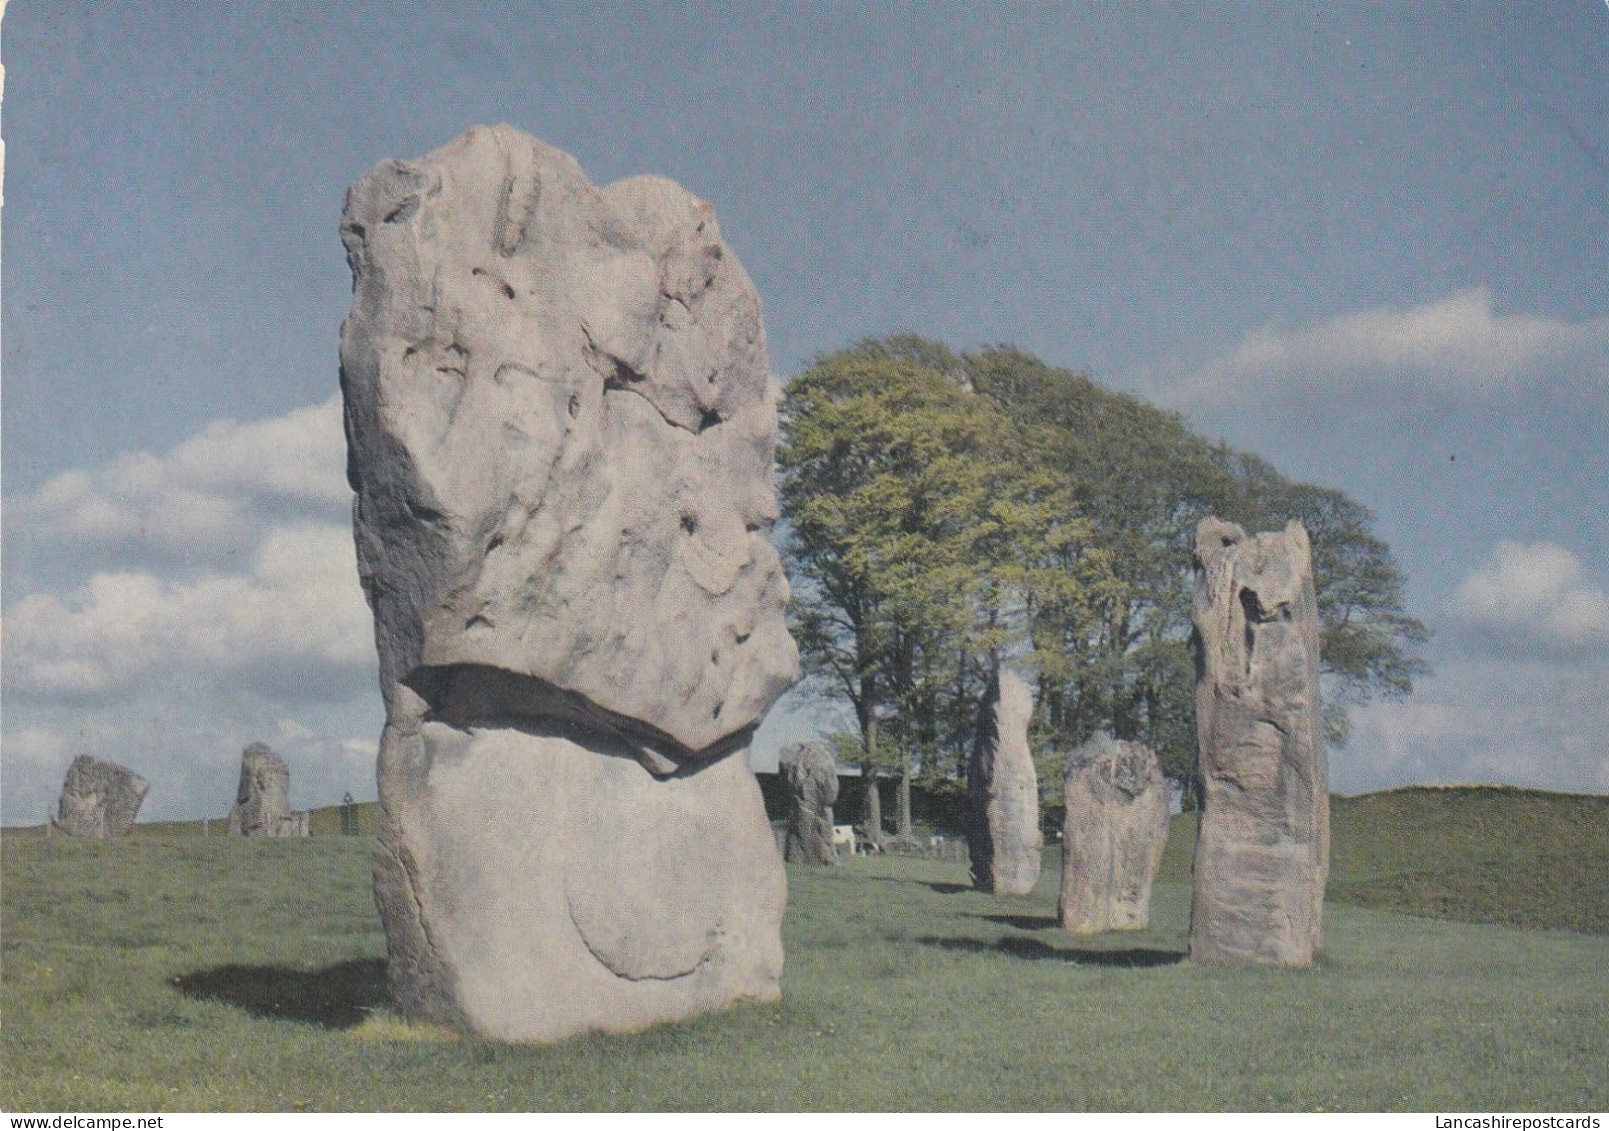 Postcard Avebury Wiltshire England Dolmen Menhirs Standing Stones PU 1973 My Ref B26435 - Dolmen & Menhirs